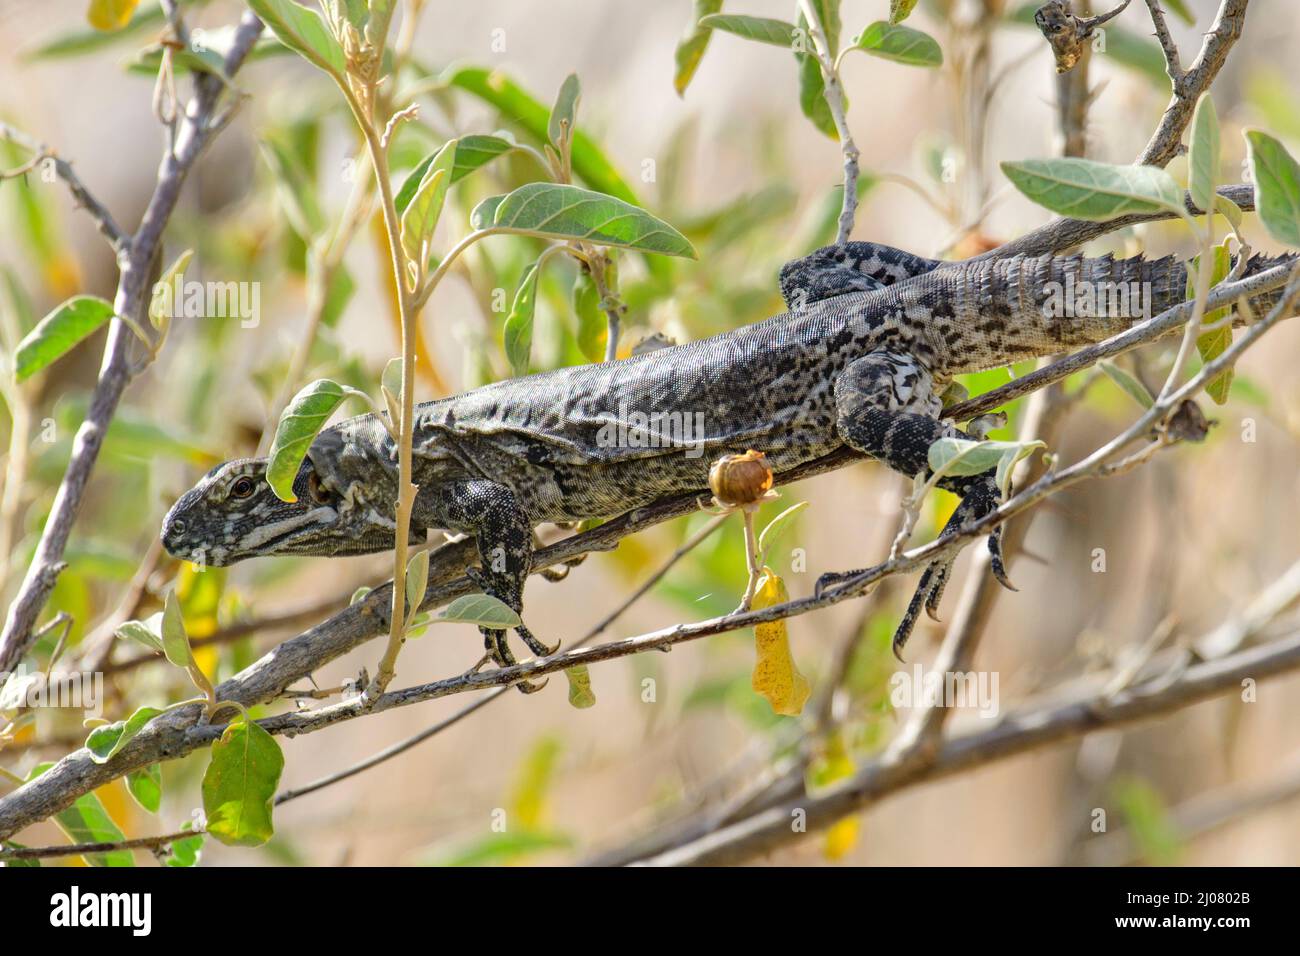 Messico, Baja California sur, El Sargento, Rancho sur, Ctenosaura hemilopha, Baja California iguana a coda di rondine Foto Stock